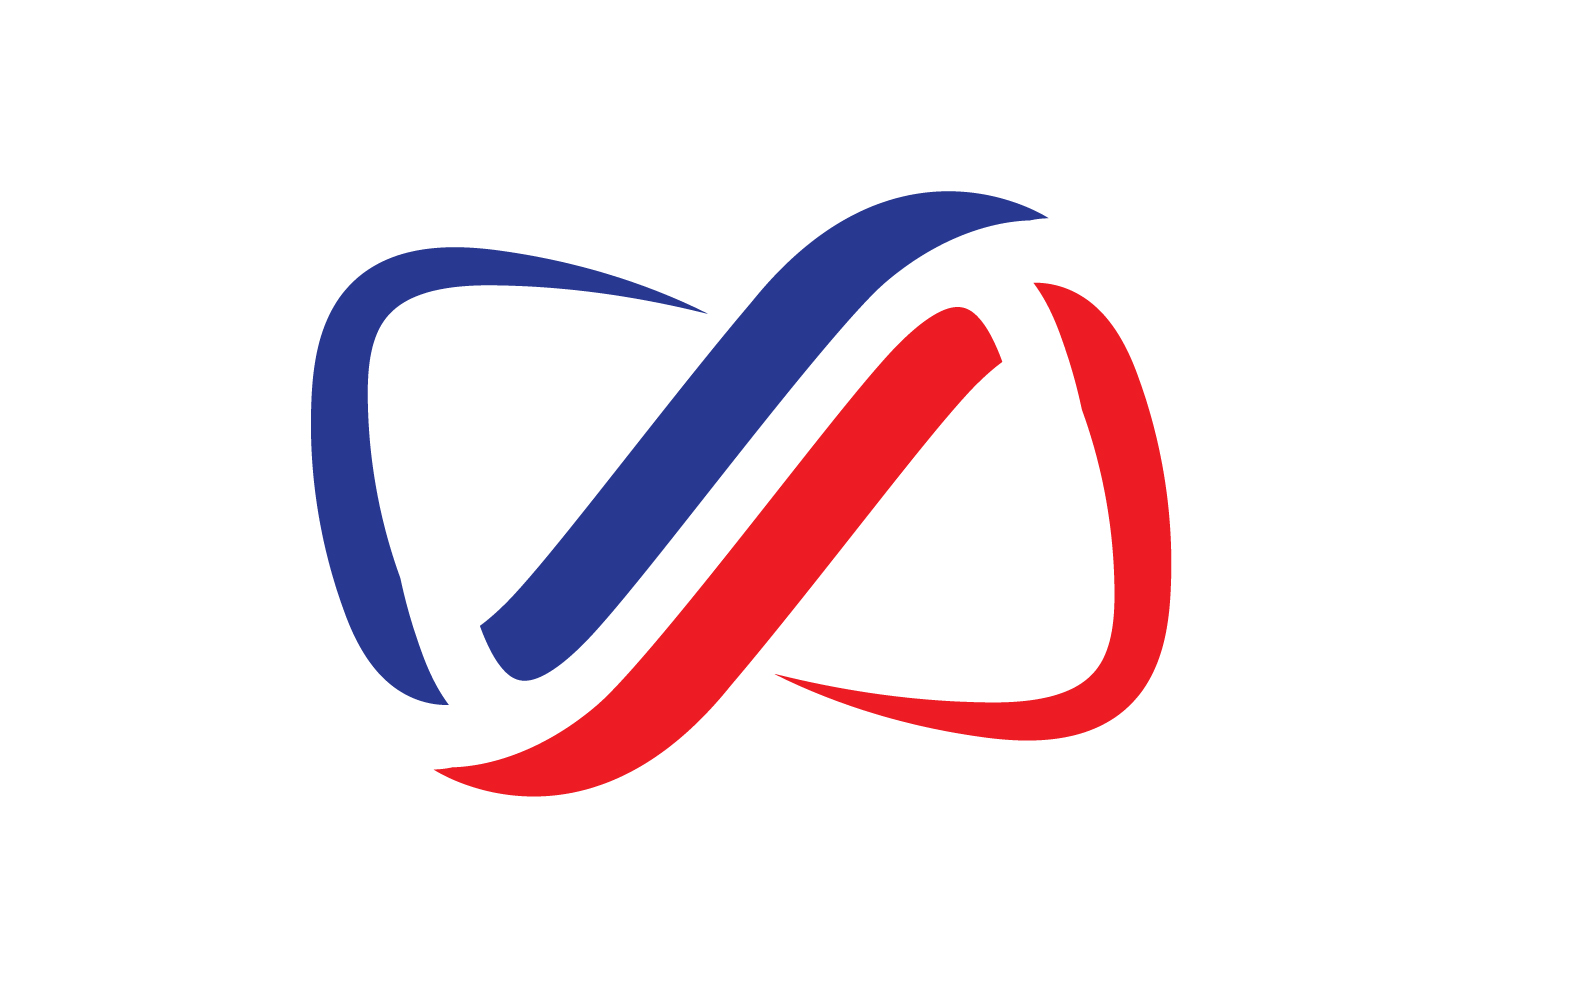 Infinity loop line logo and symbol vector v15